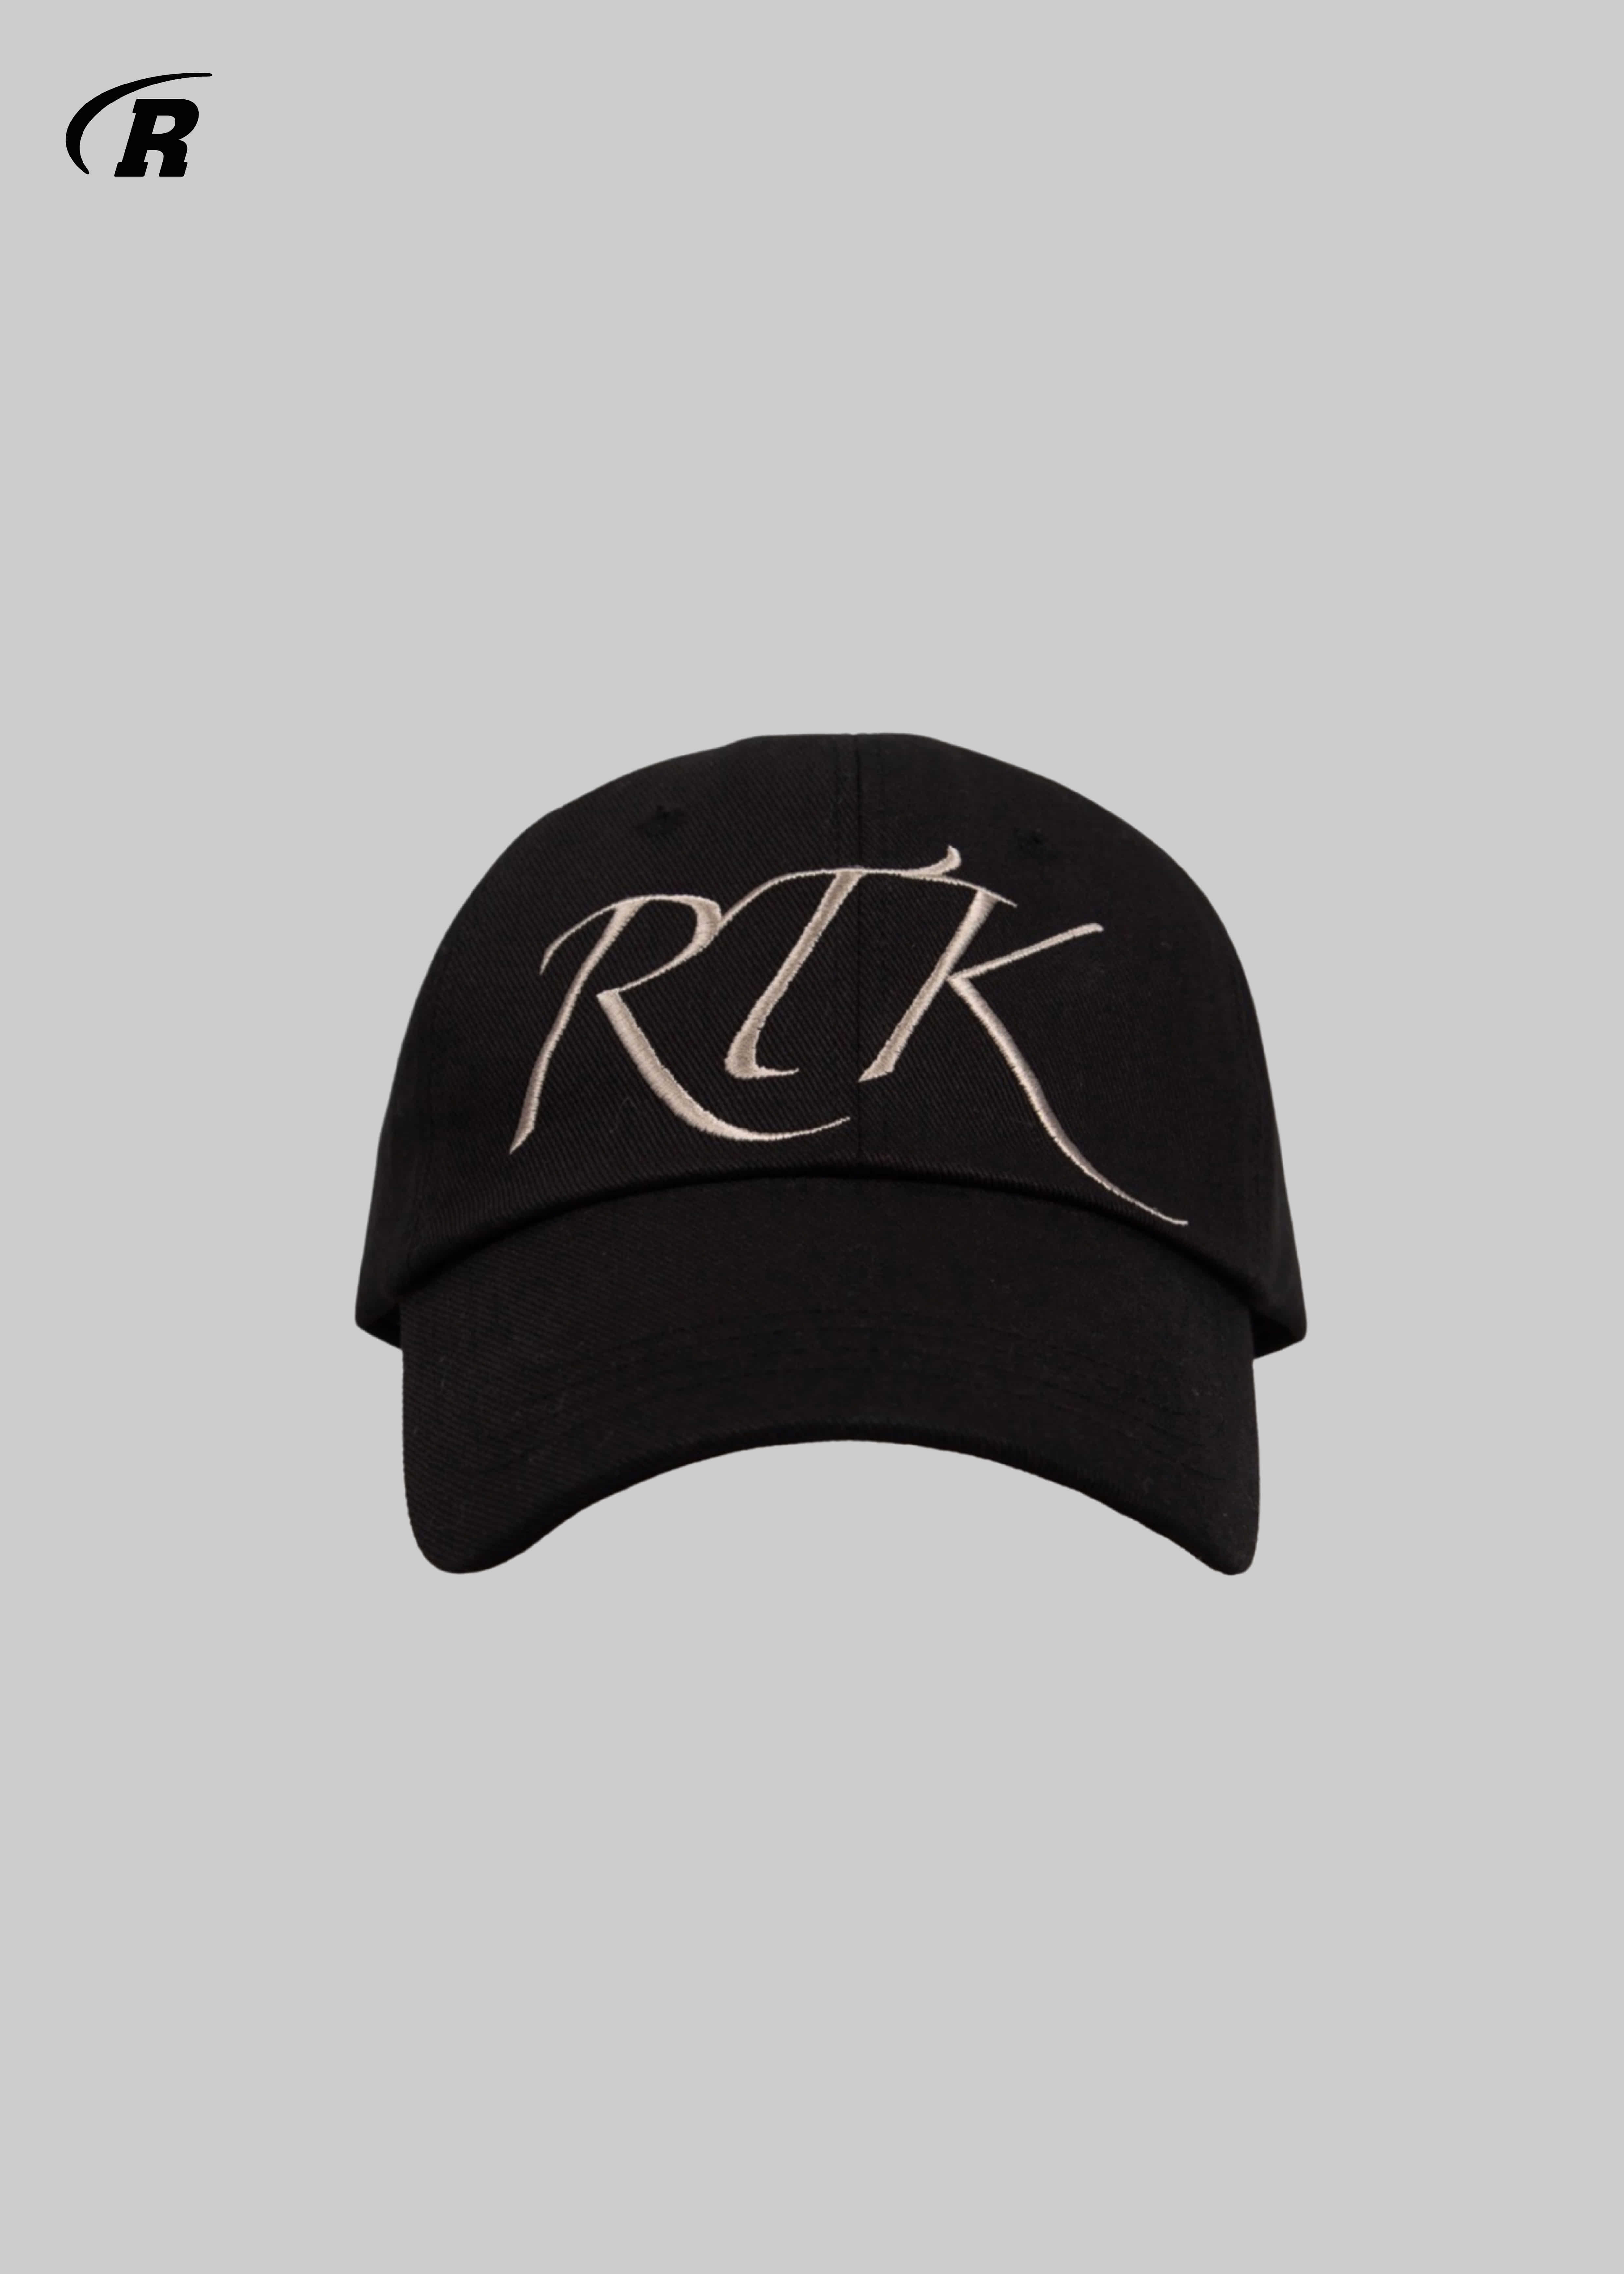 Rtk. BALL CAP, BLACK